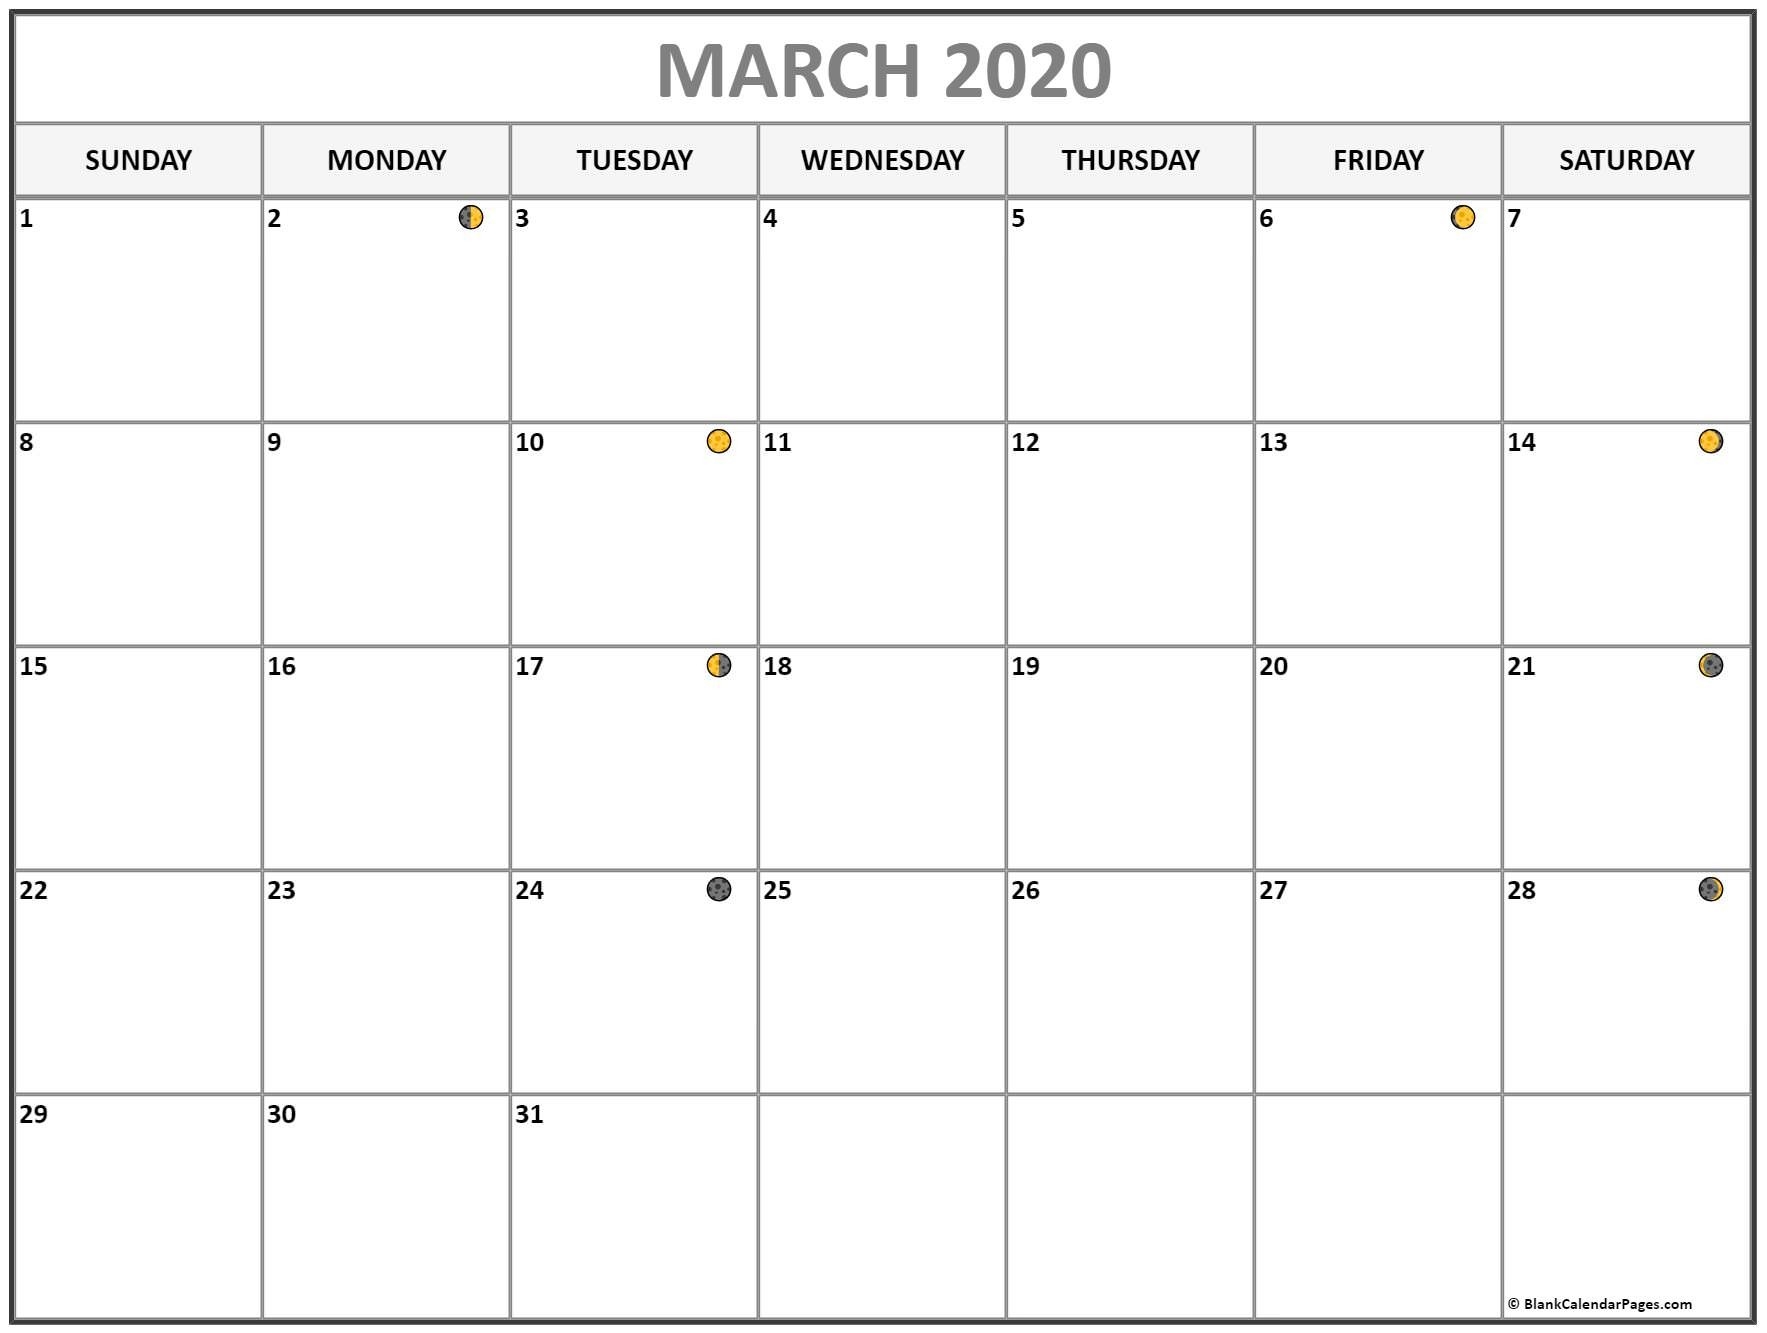 March 2020 Lunar Calendar | Moon Phase Calendar  2020 Solar Calendar Vs Lunar Calendar